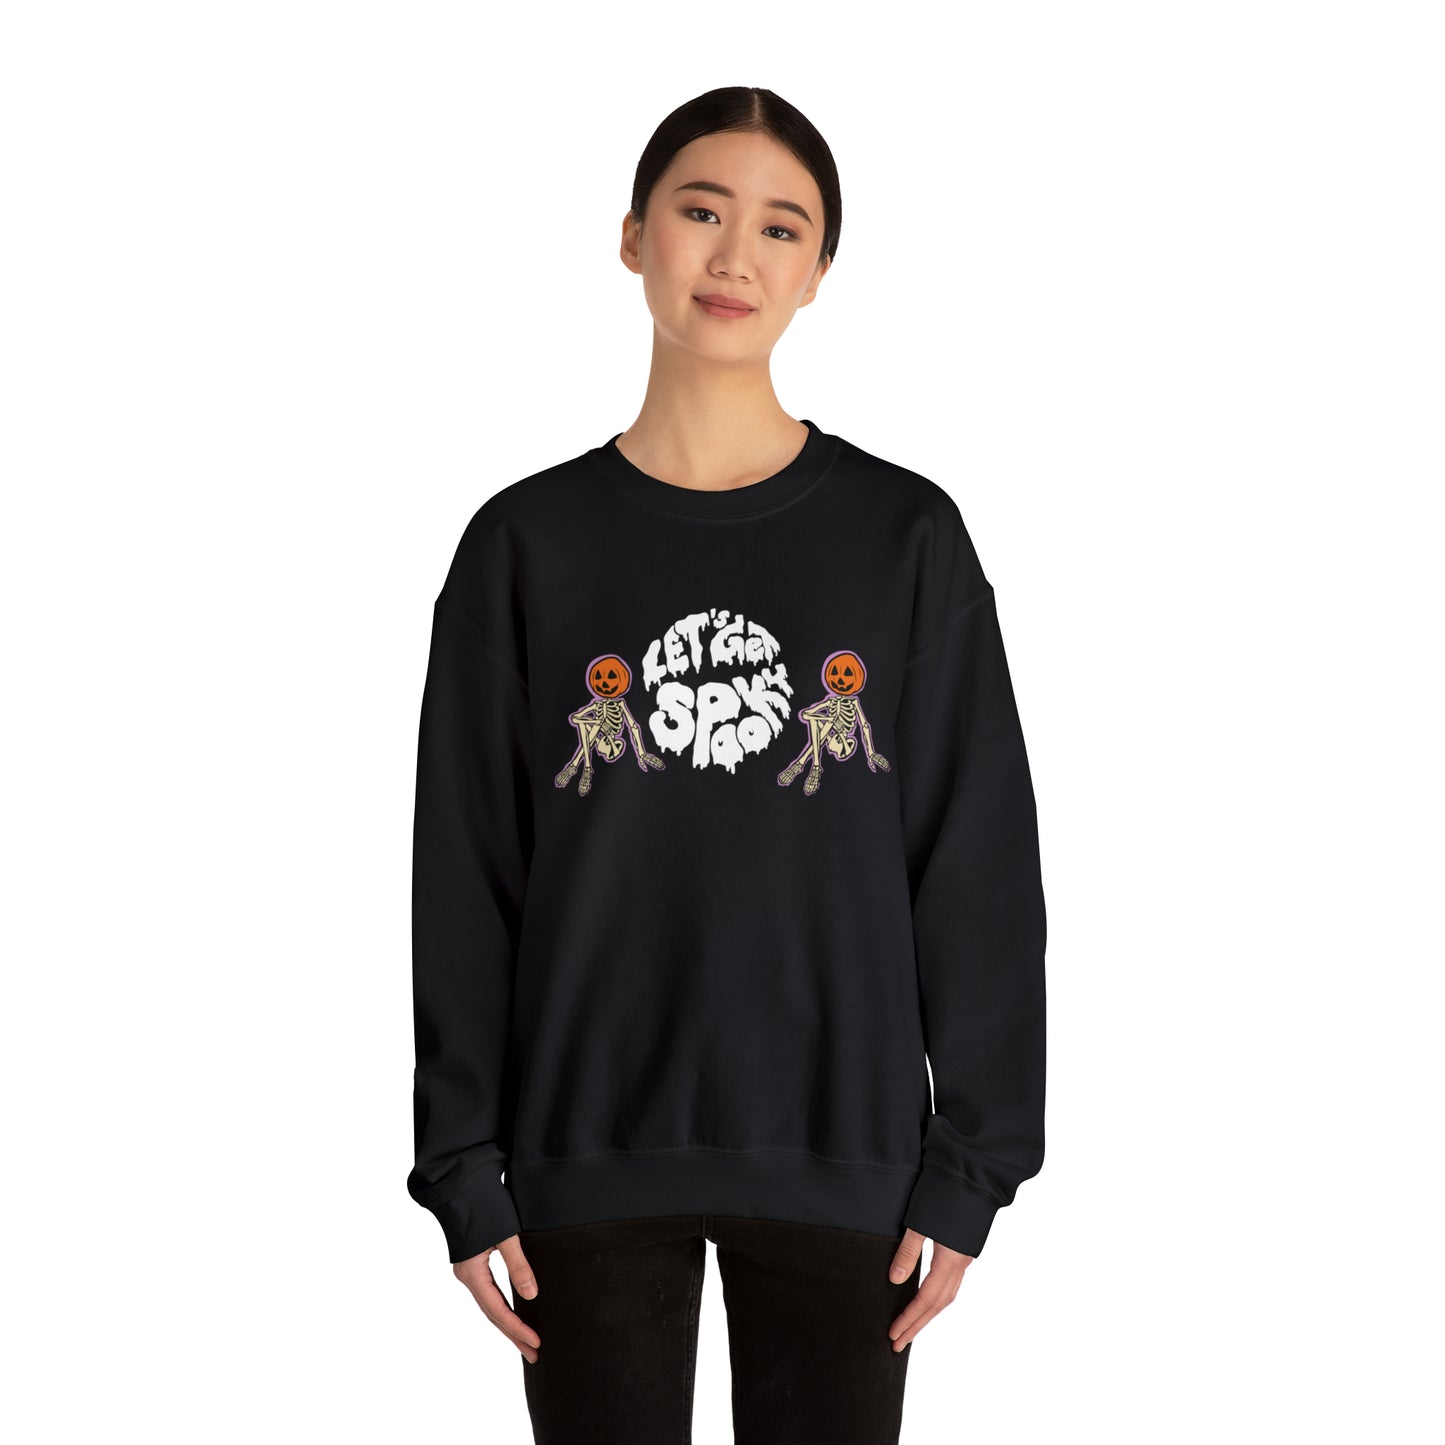 Lets Get Spook Skeleton Pumpkins Unisex Heavy Blend Crewneck Sweatshirt